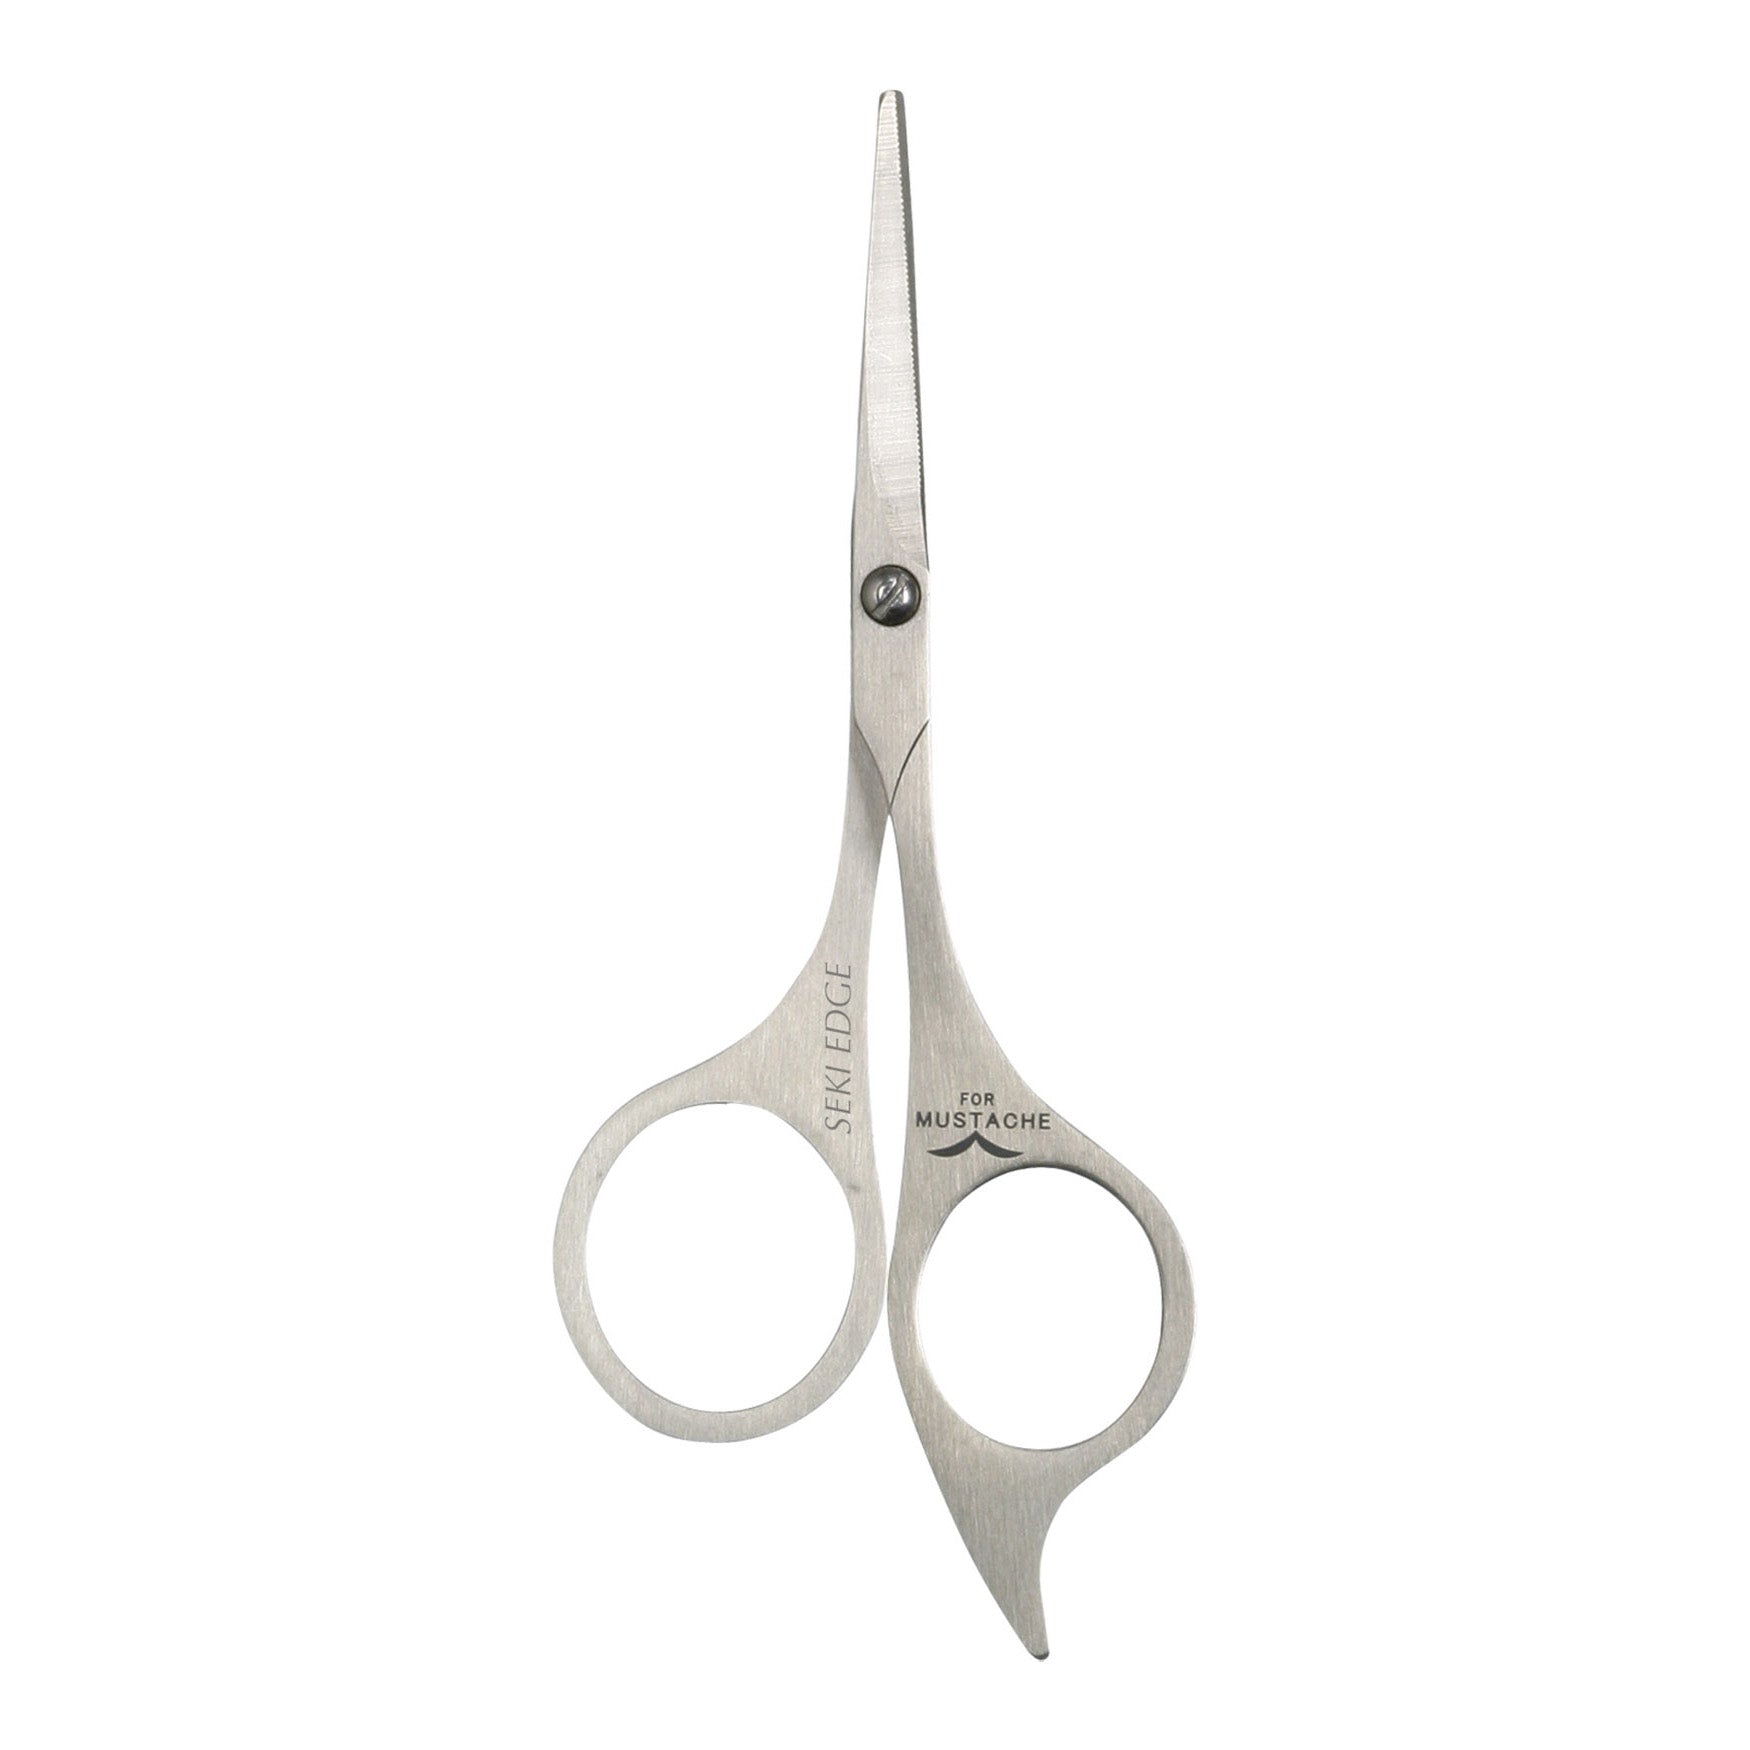 Mustache scissors stainless steel